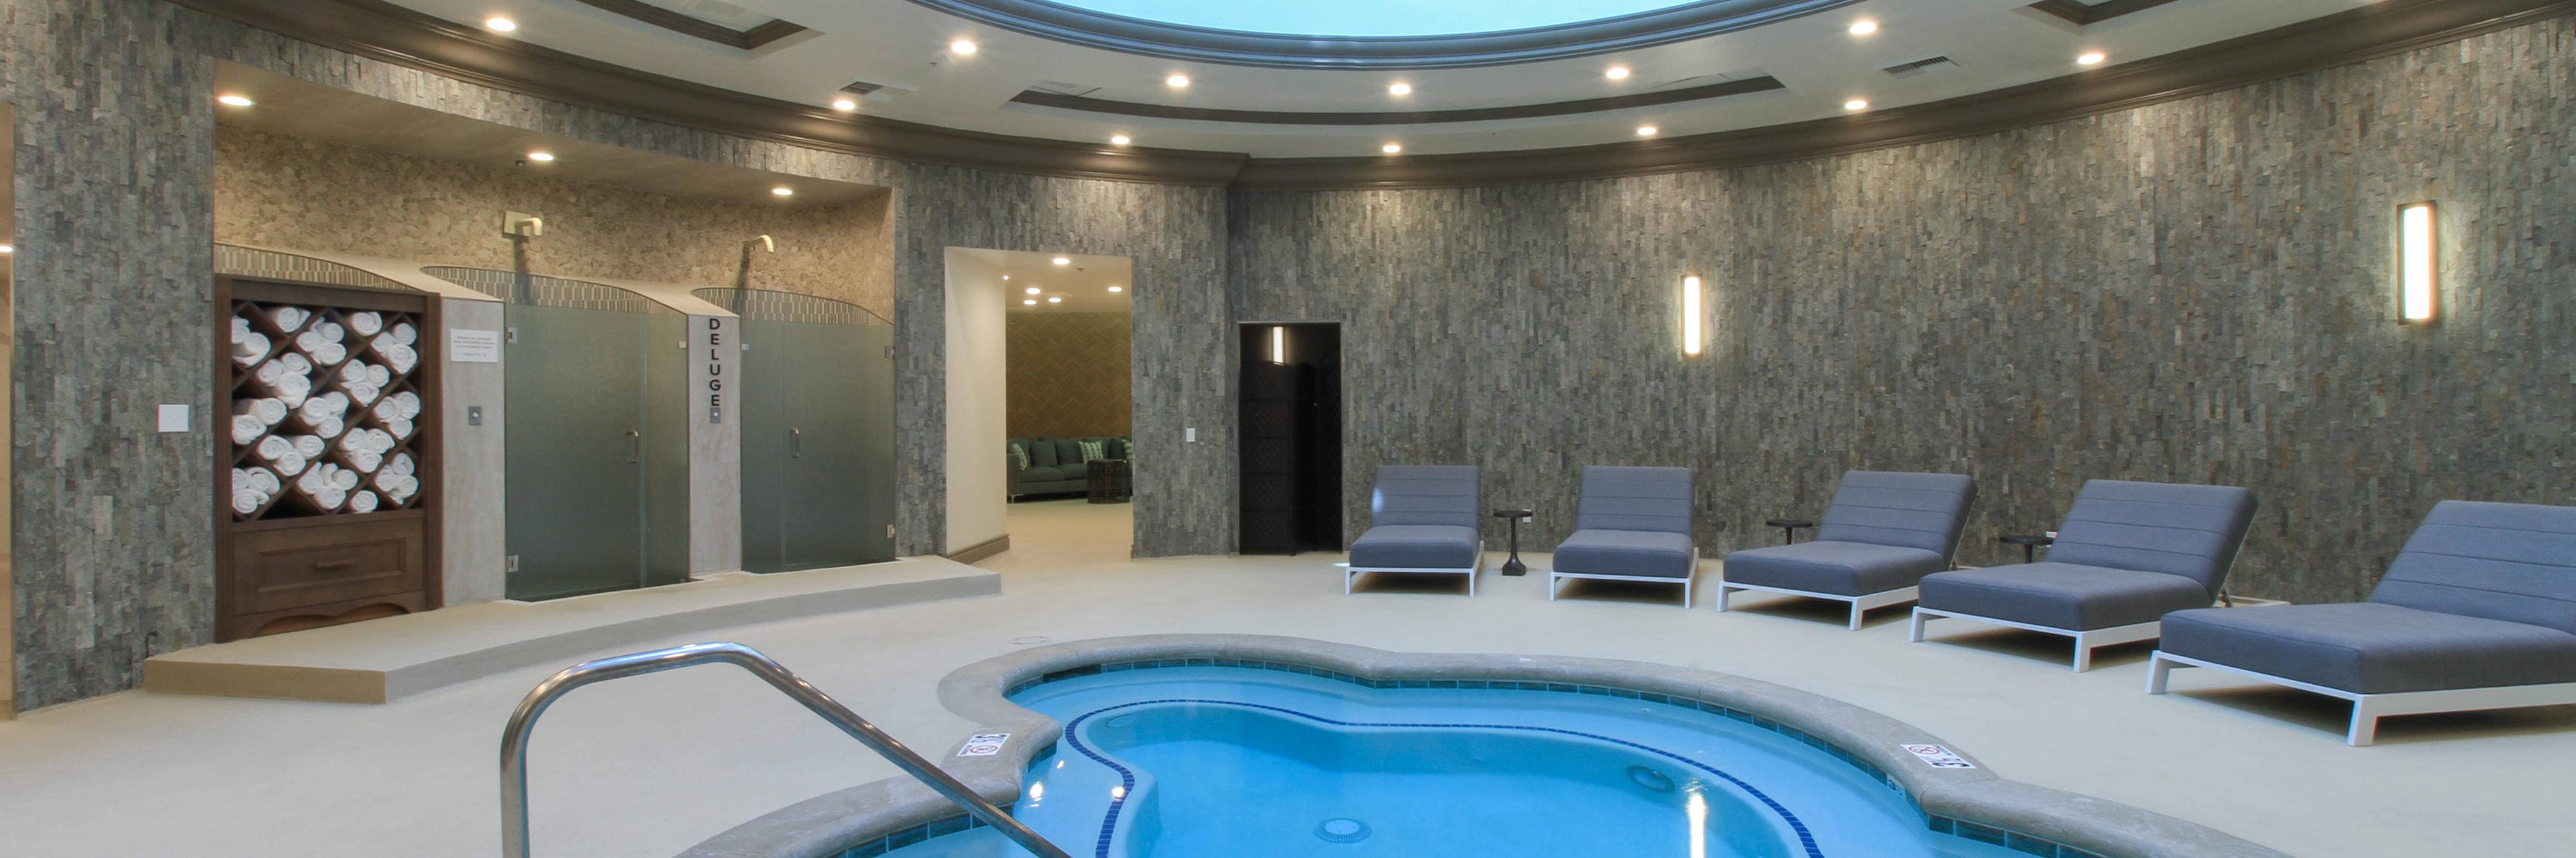 Spa Aquae - Indoor Plunge Pool